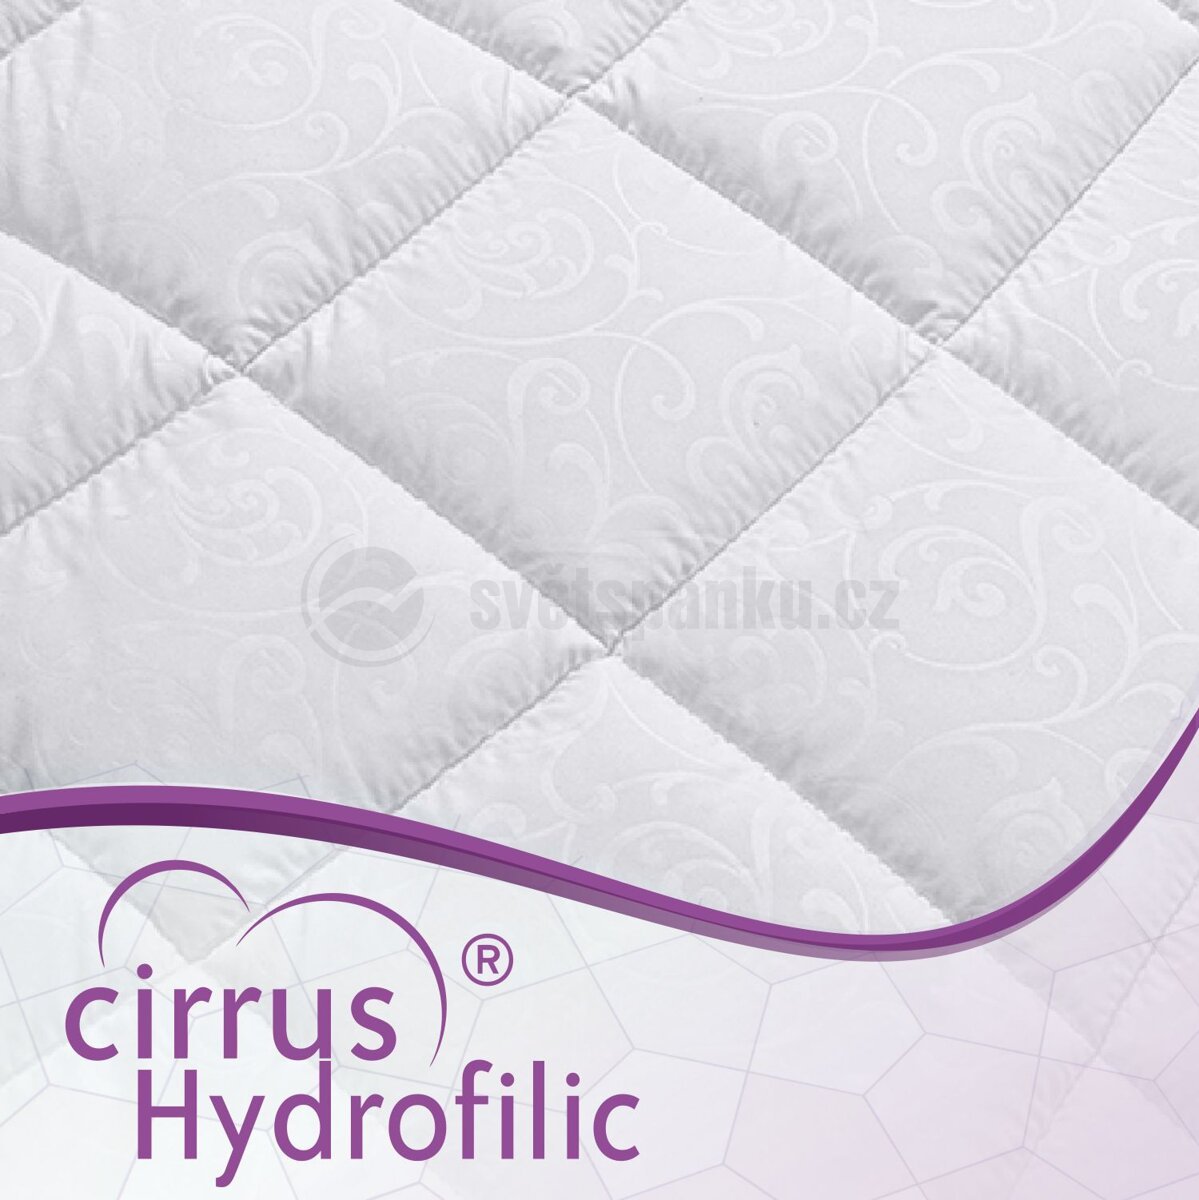 cirrus-hydrofilic-detail